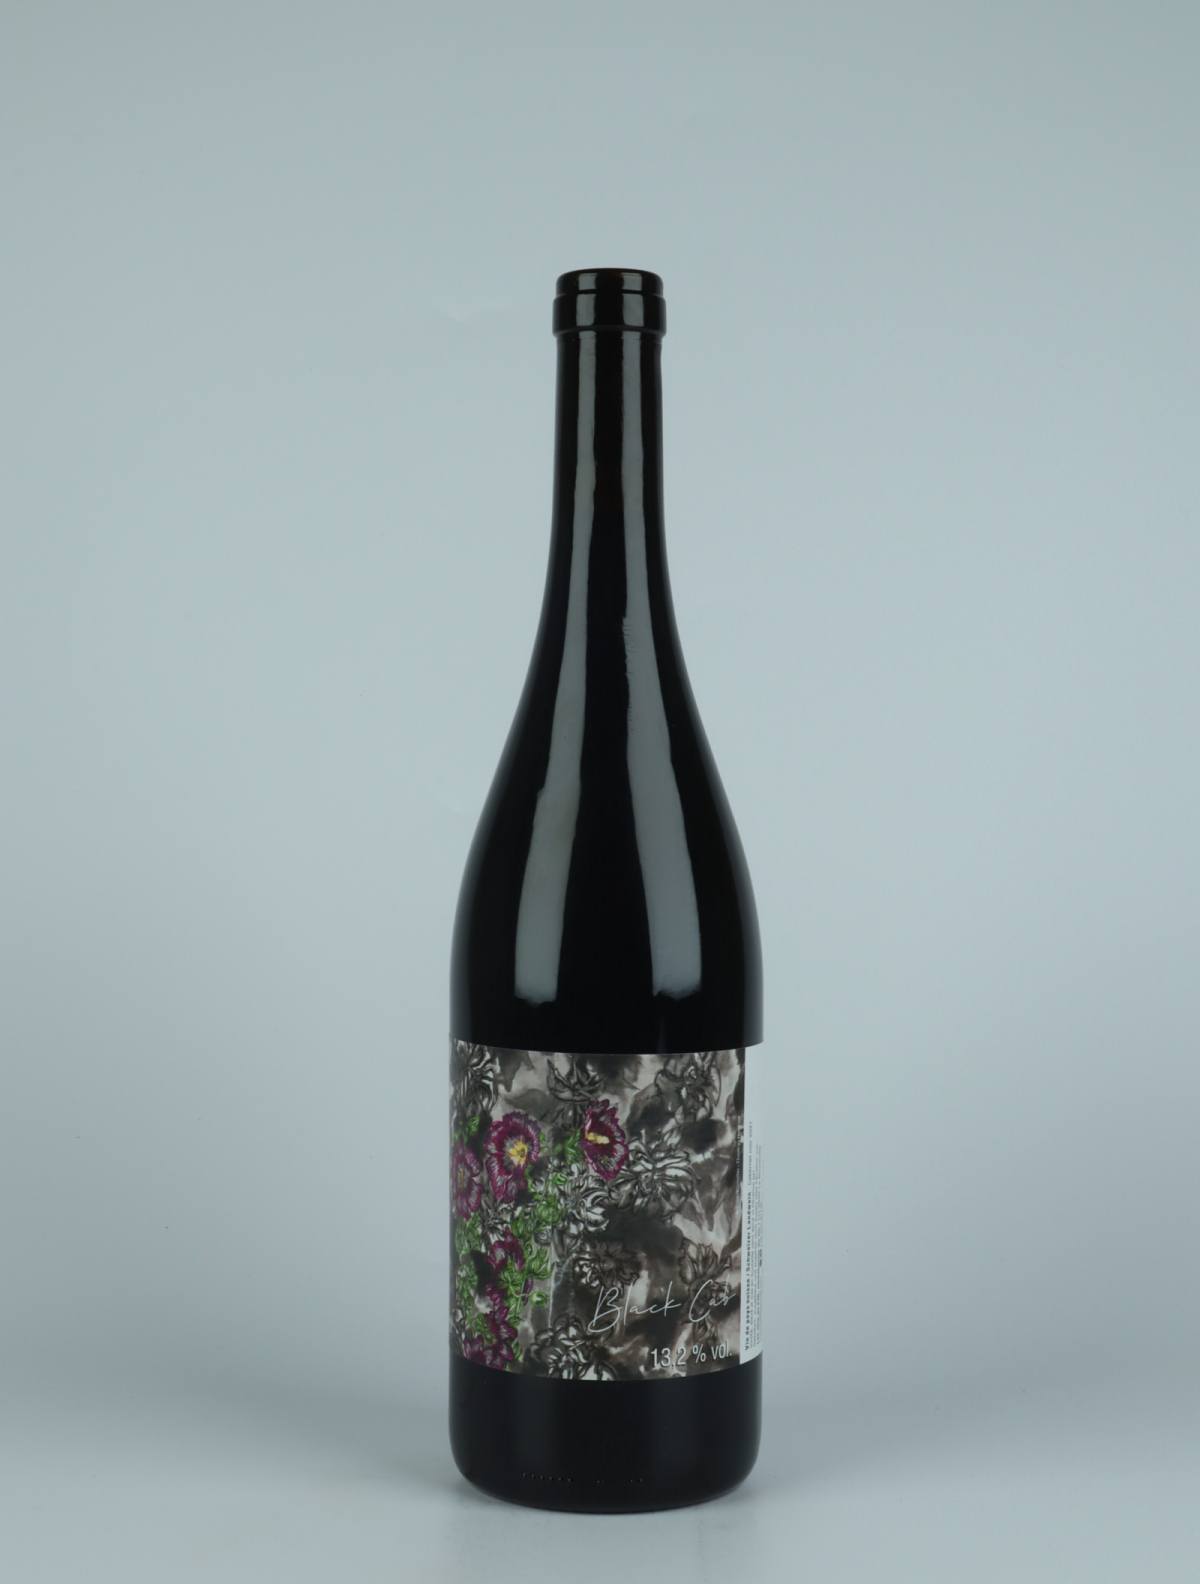 A bottle 2021 Cabernet Noir Red wine from Les Vins du Fab, Neuchâtel in 